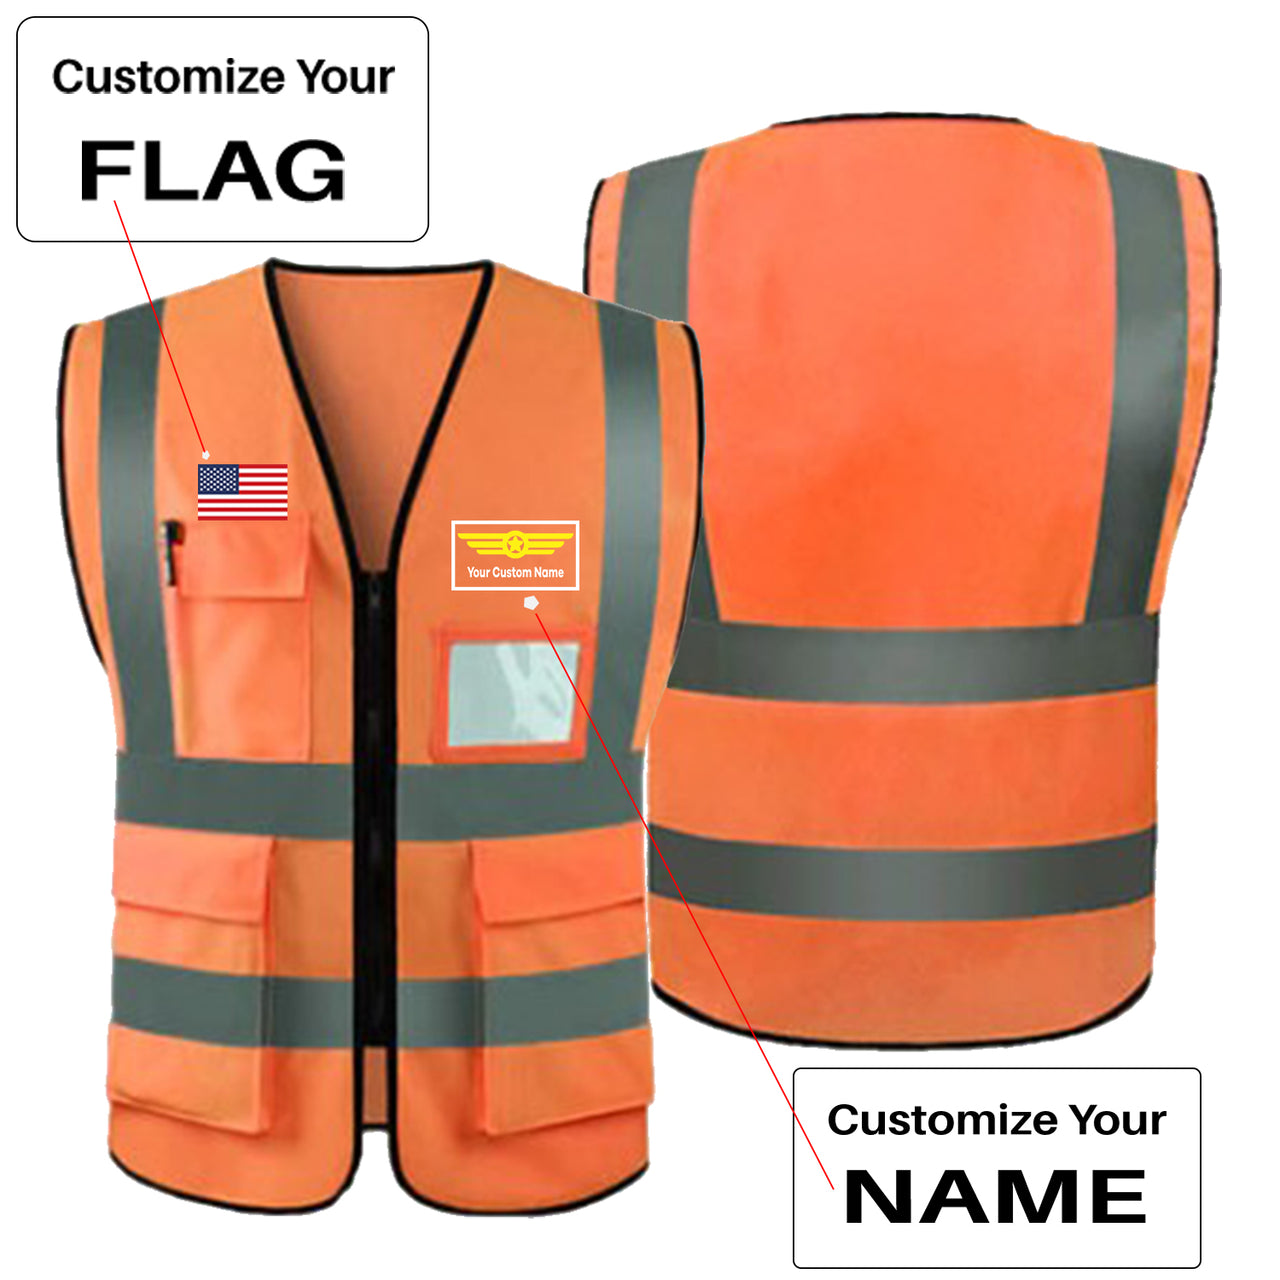 Custom Flag & Name with Badge Designed Reflective Vests